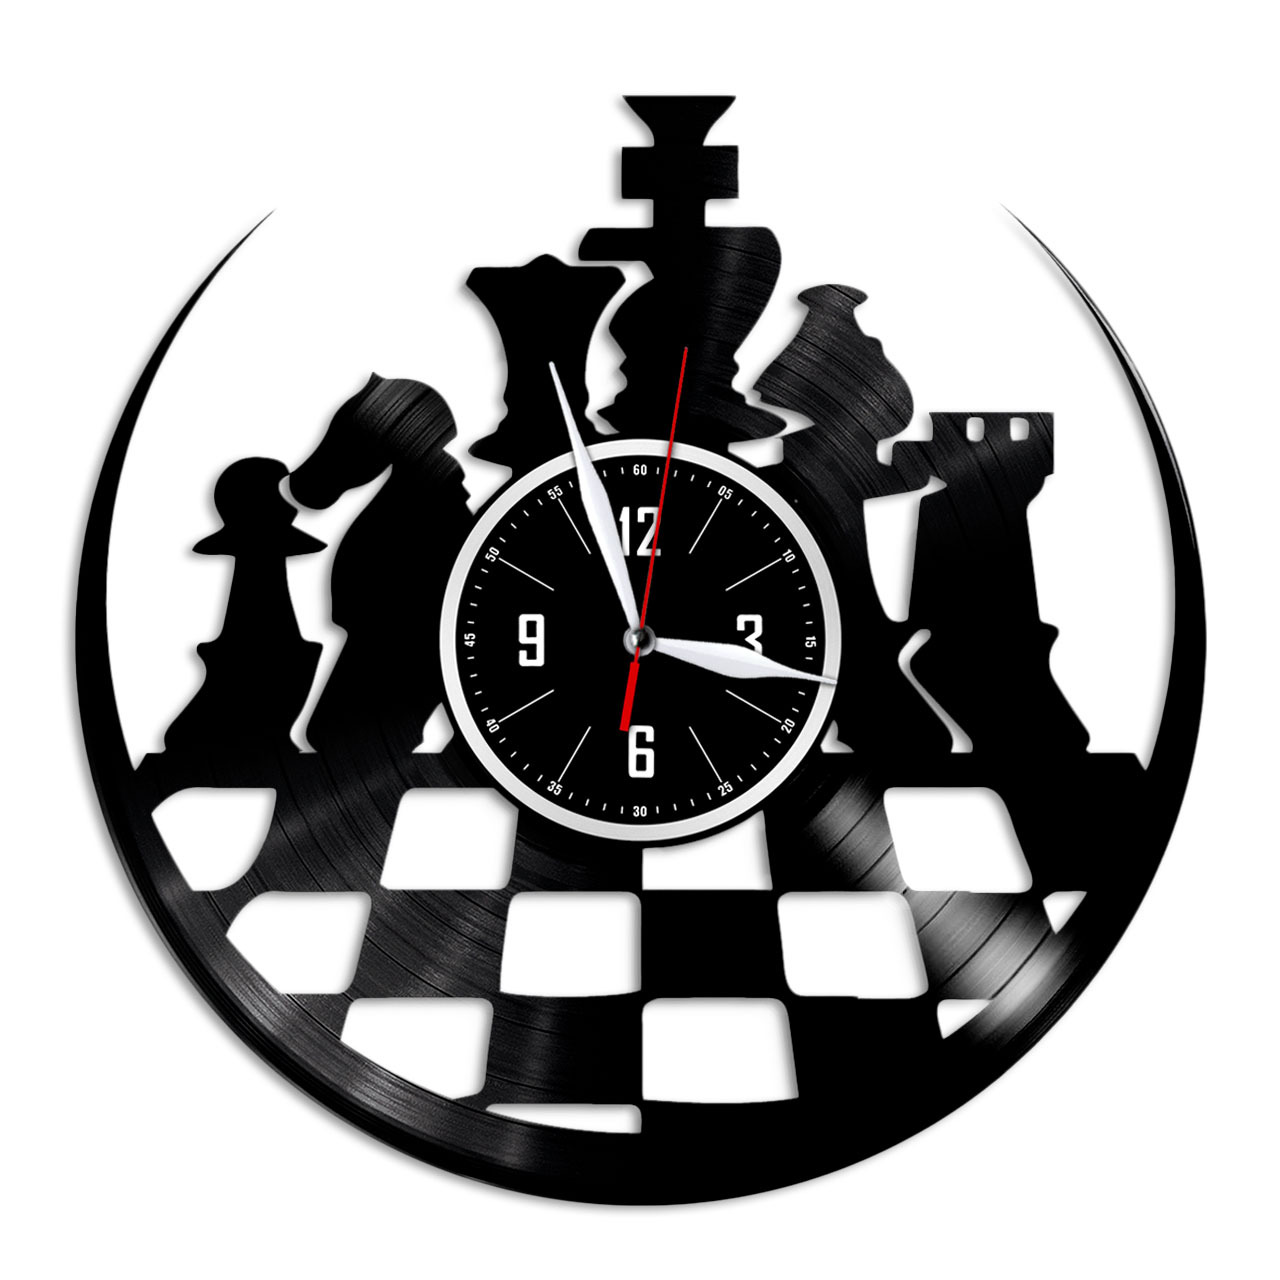 Количество циферблатов в шахматных часах. Часы для шахмат. Настенные шахматные часы. Часы в шахматном стиле. Настенные часы шахматная доска.